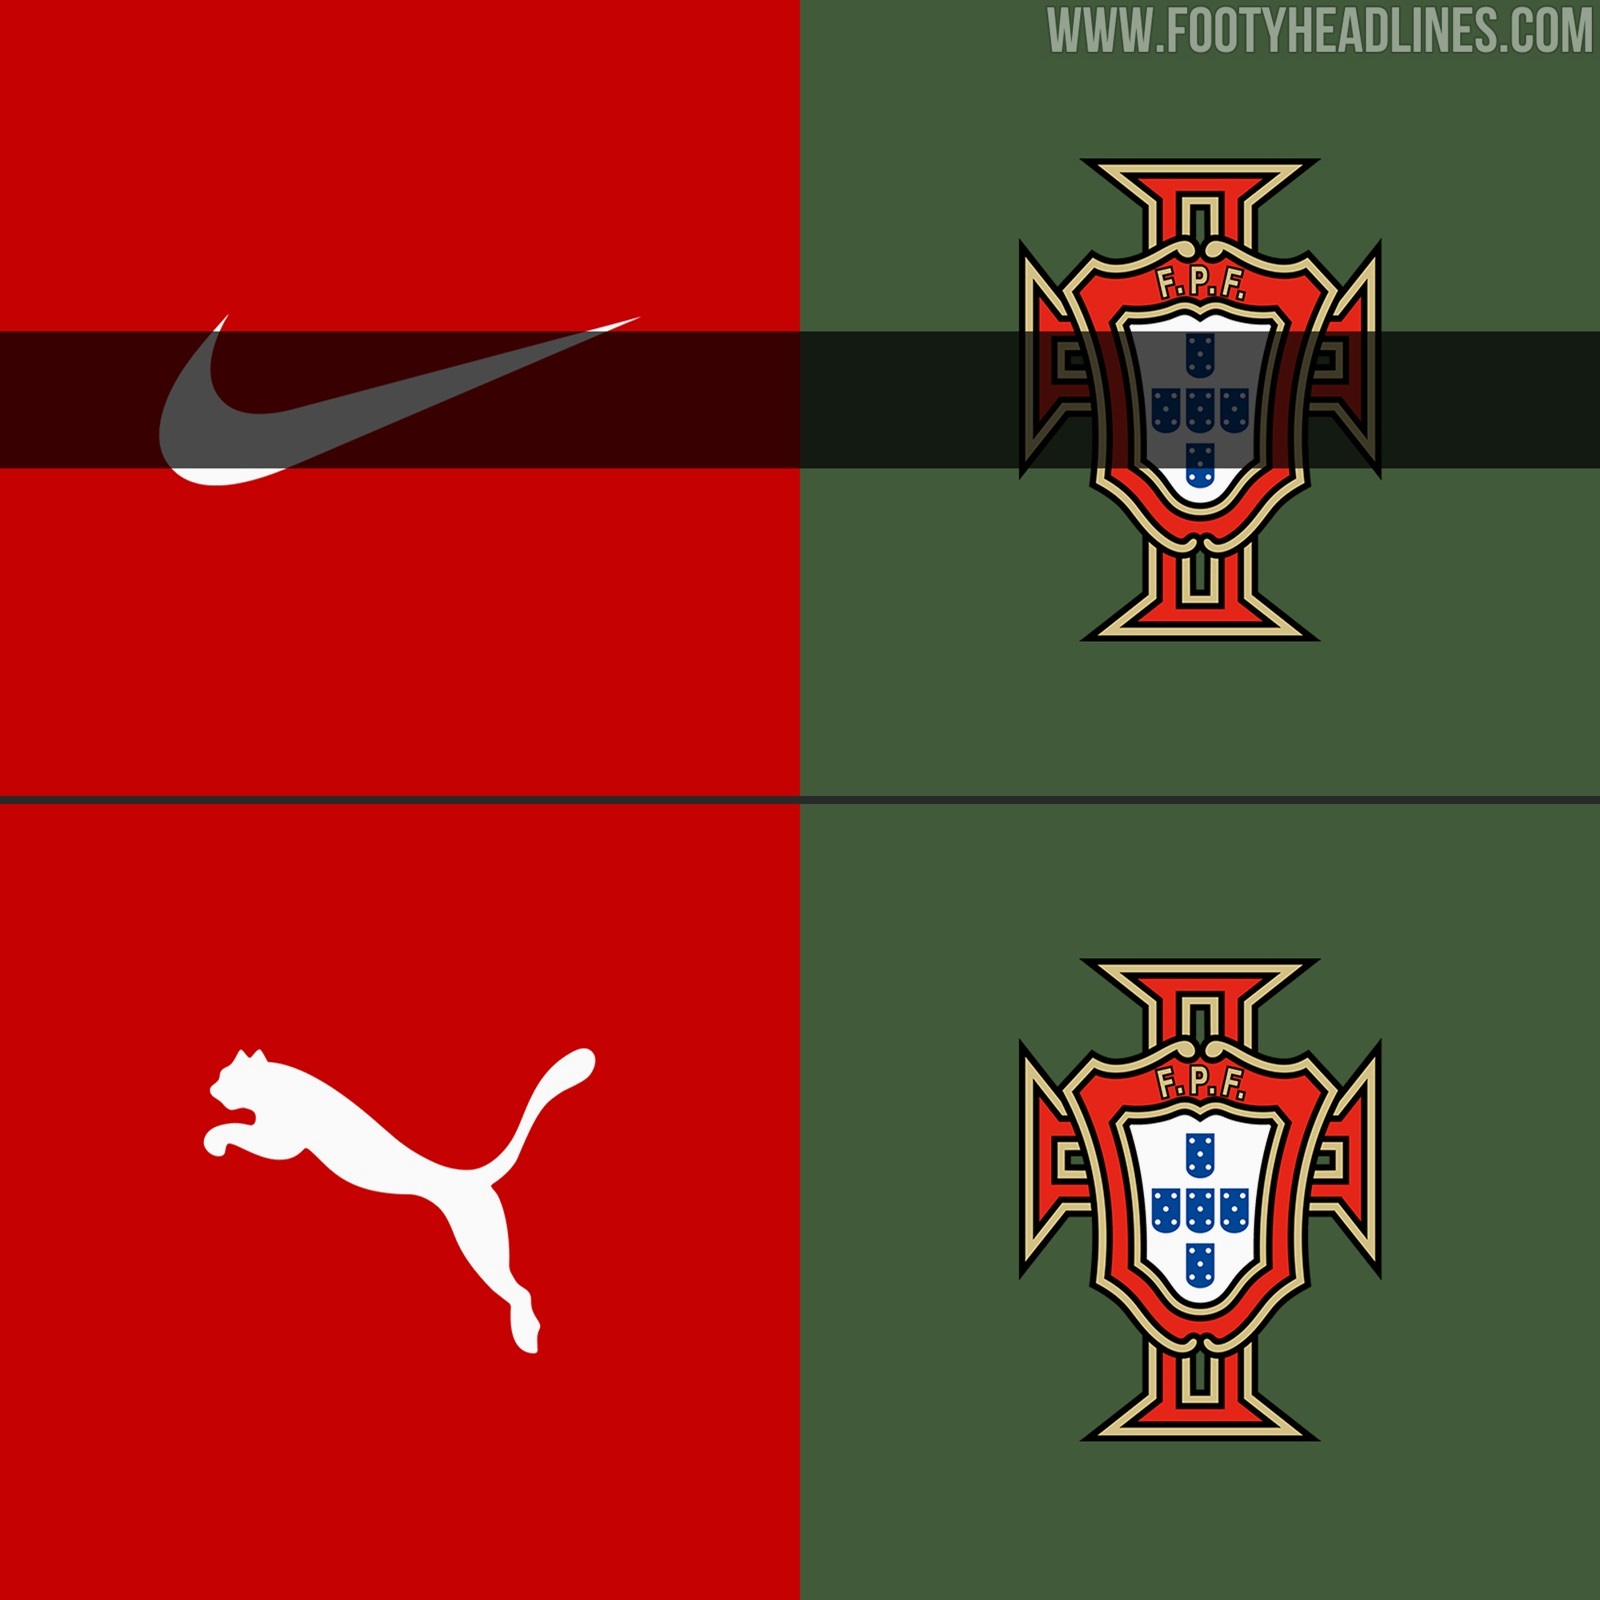 No More Nike Cristiano Ronaldo To Wear Adidas And Puma Kits Soon